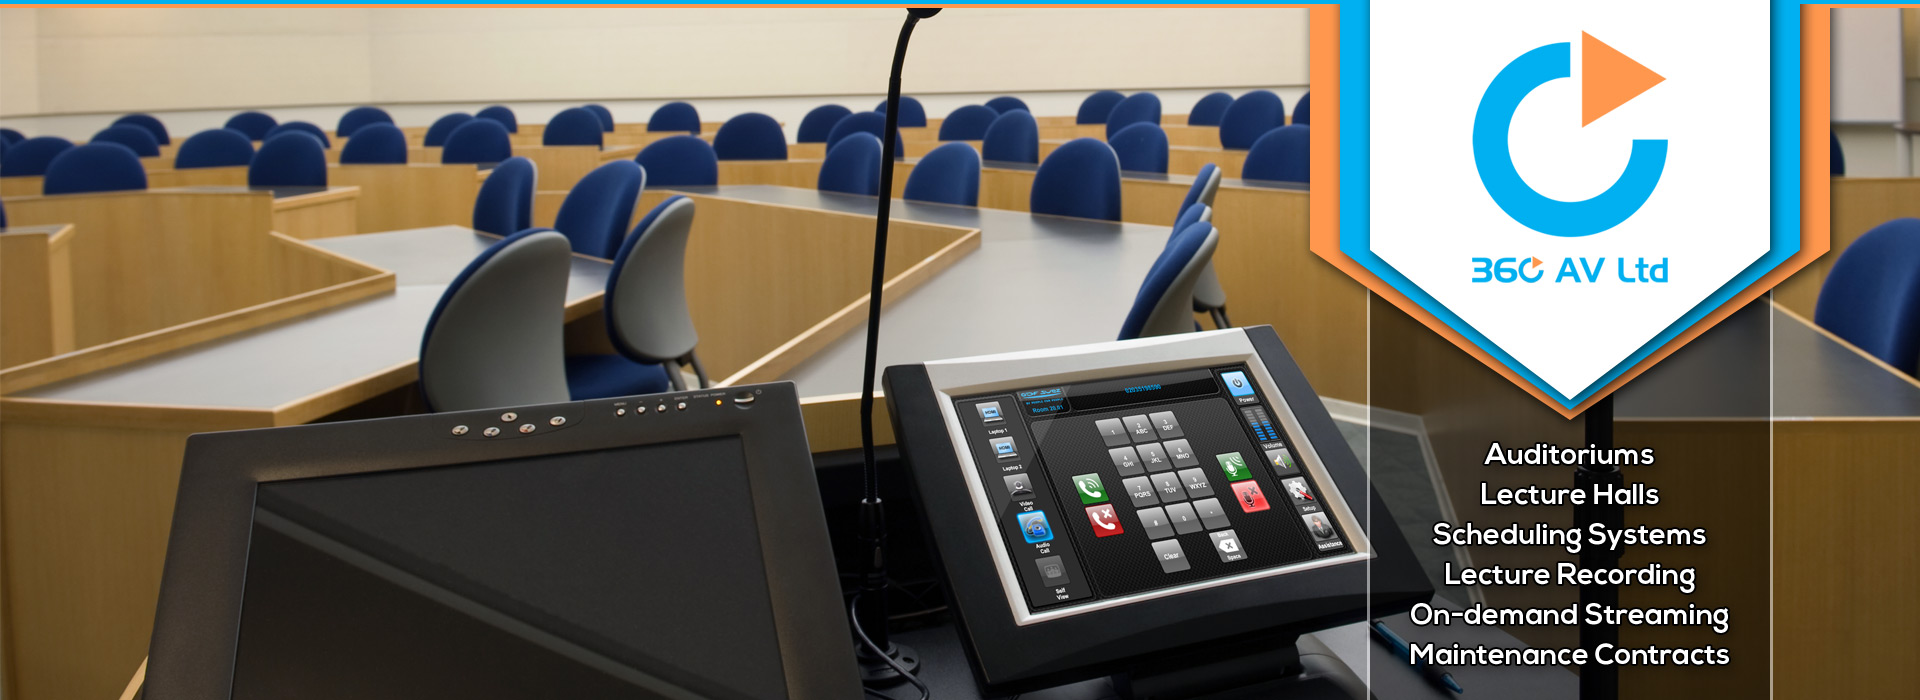 360 AV Ltd | Educational Crestron Touch Panel Control